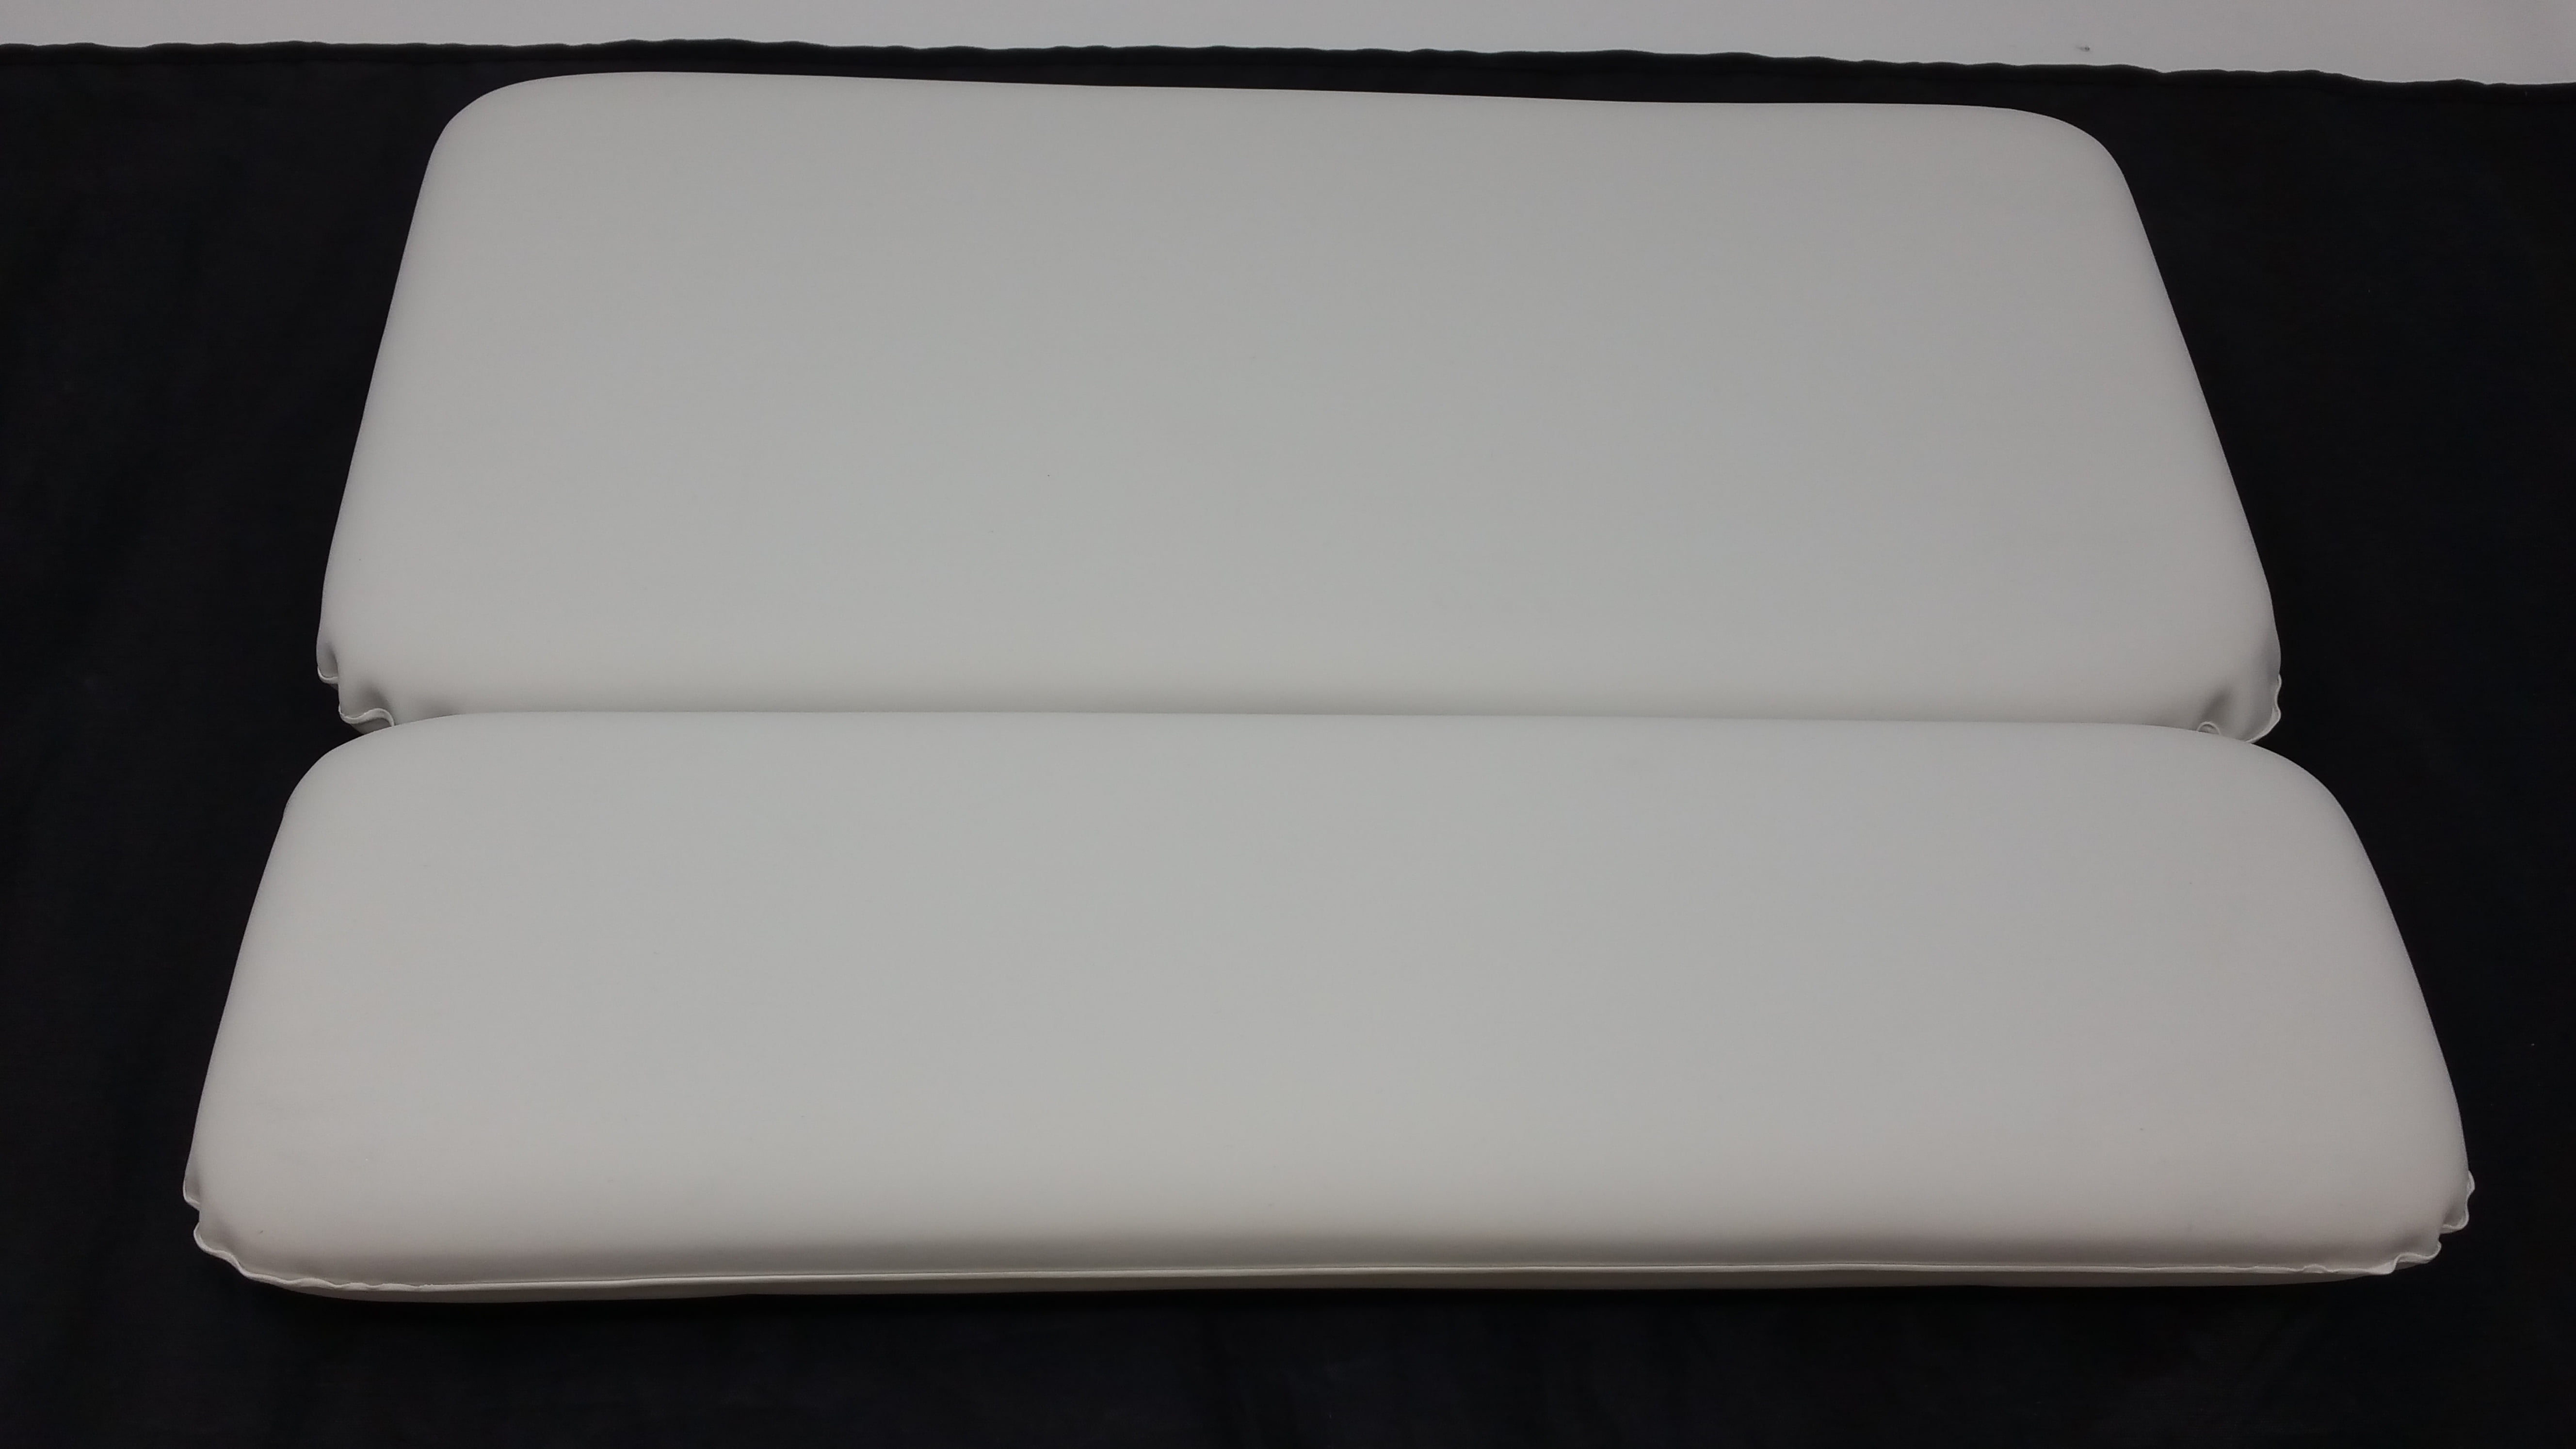 Gorilla Grip 2-Panel Non-Slip 7 Suction Cup Bath Pillow White for sale online 